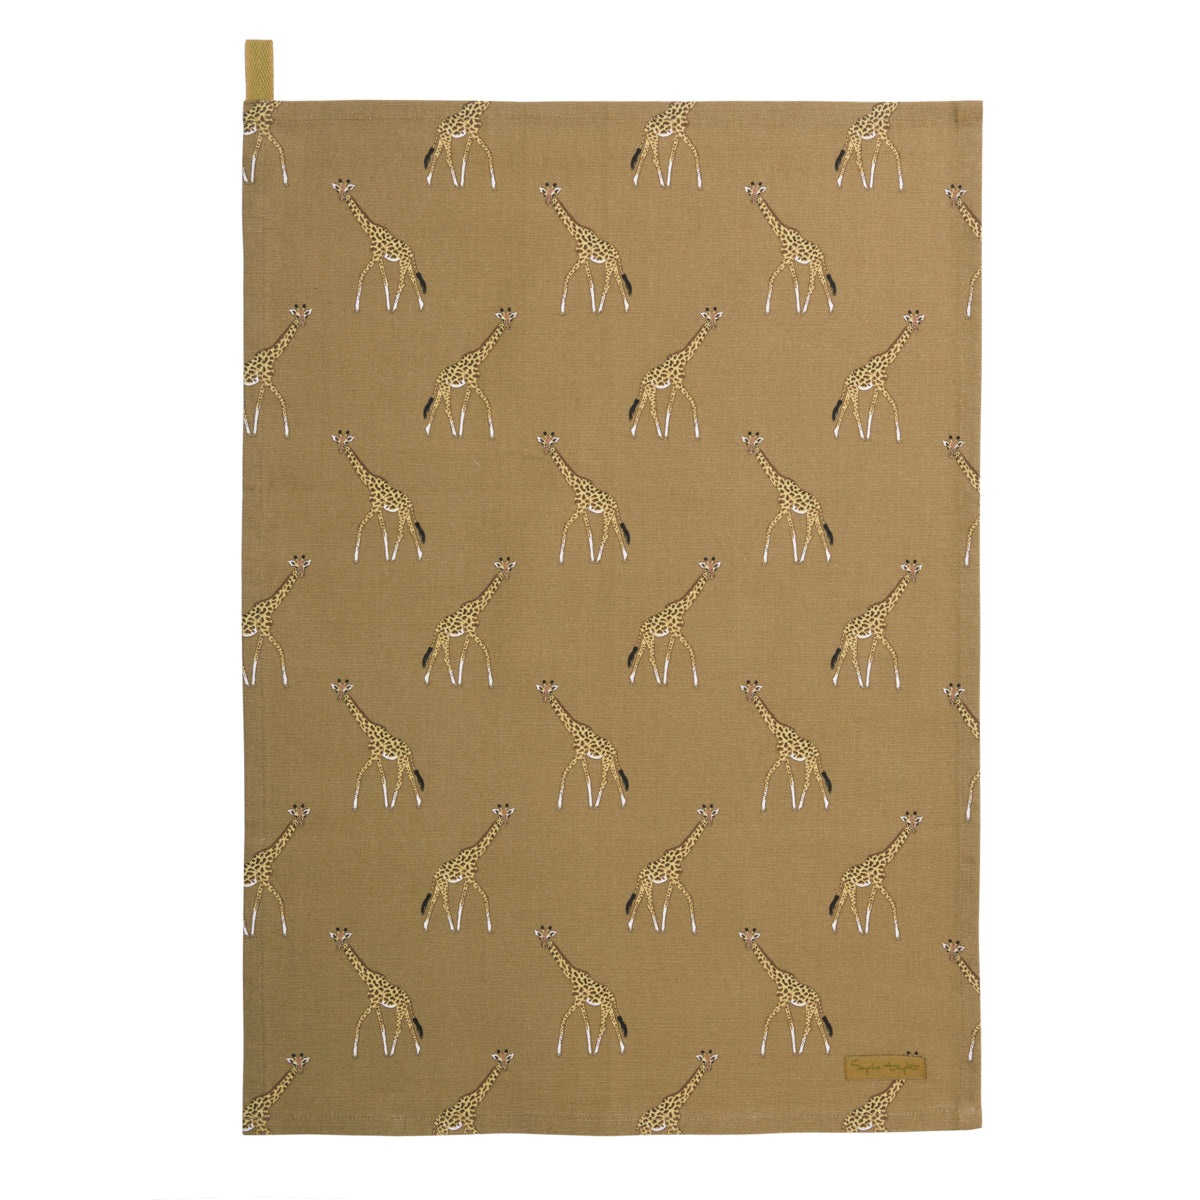 Giraffe Tea Towel by Sophie Allport